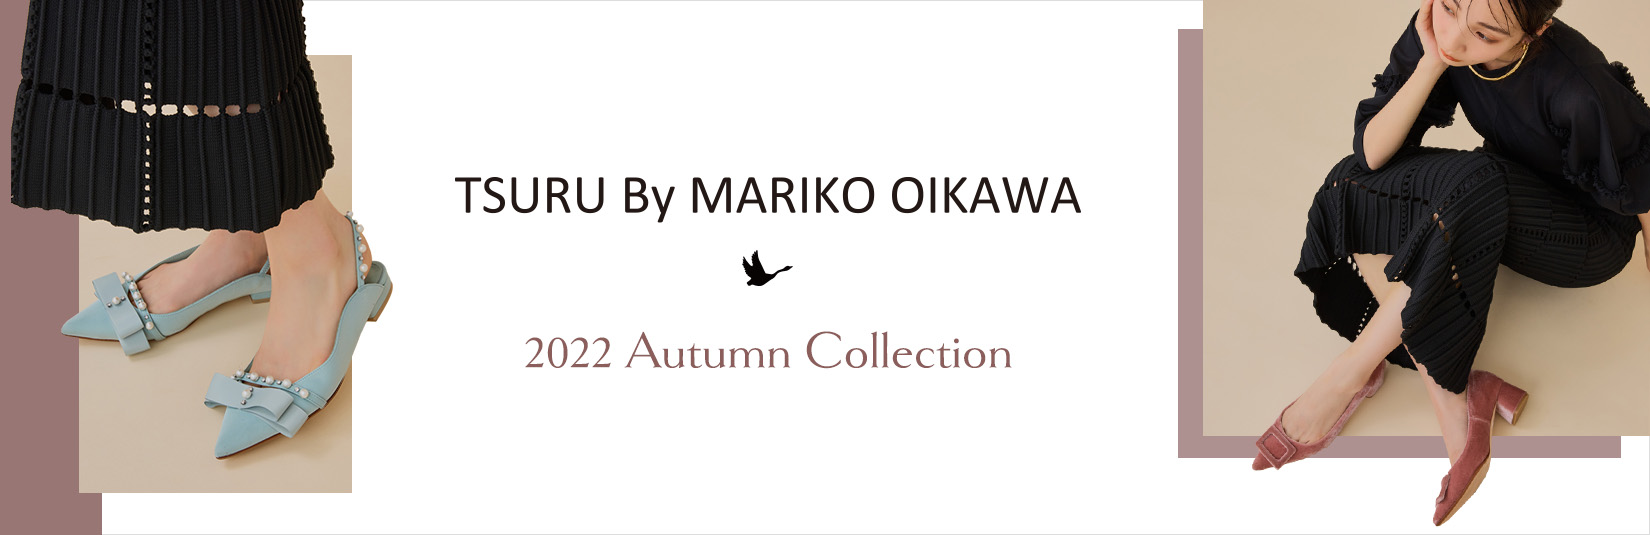 TSURU by MARIKO OIKAWA-2022Autmun Collection-